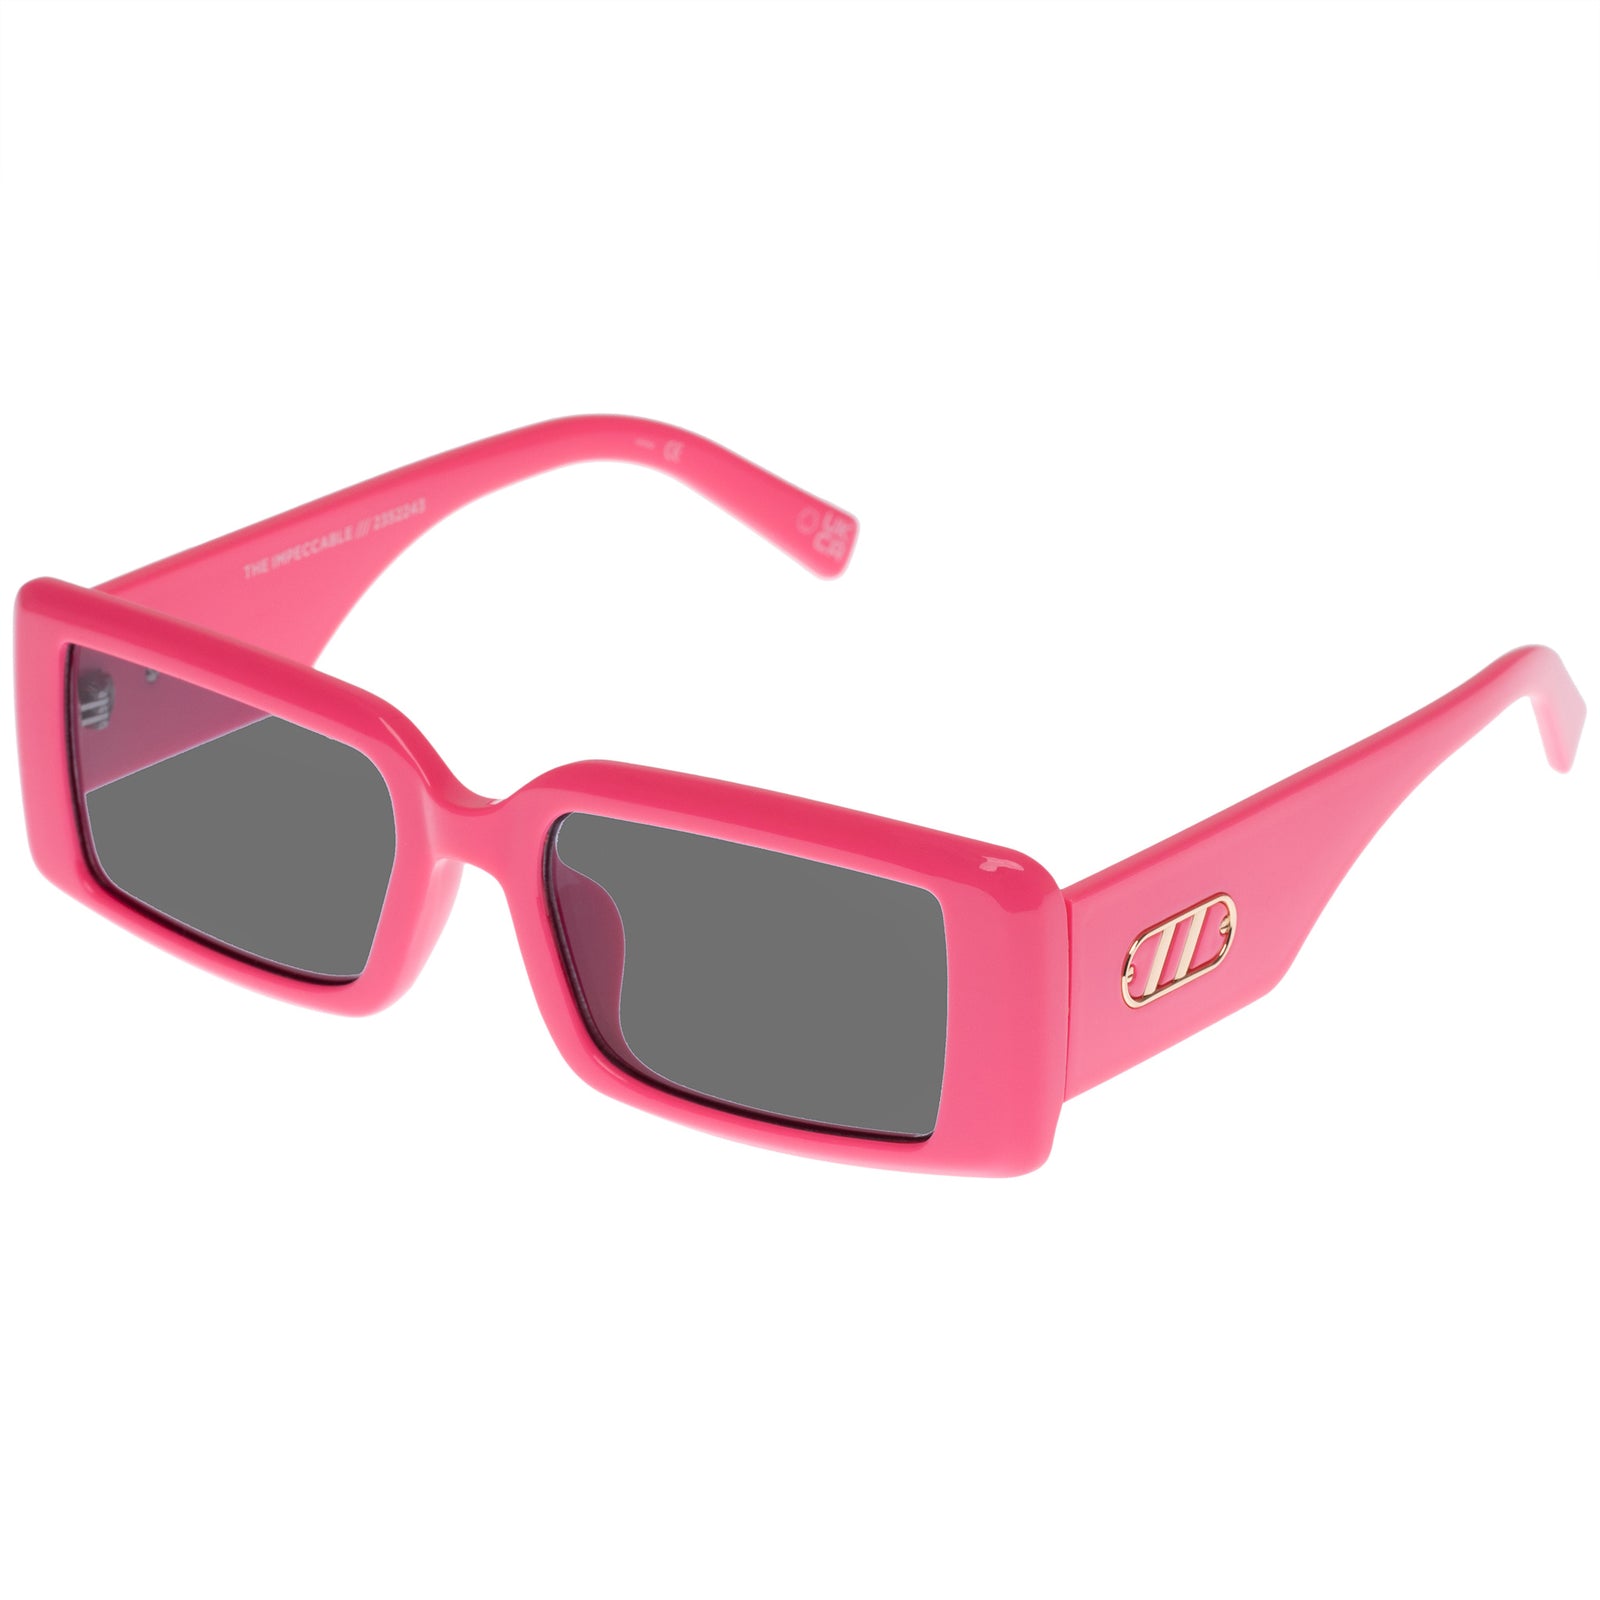 Toddler Sky Sunglasses - Safe & Fashionable Shades